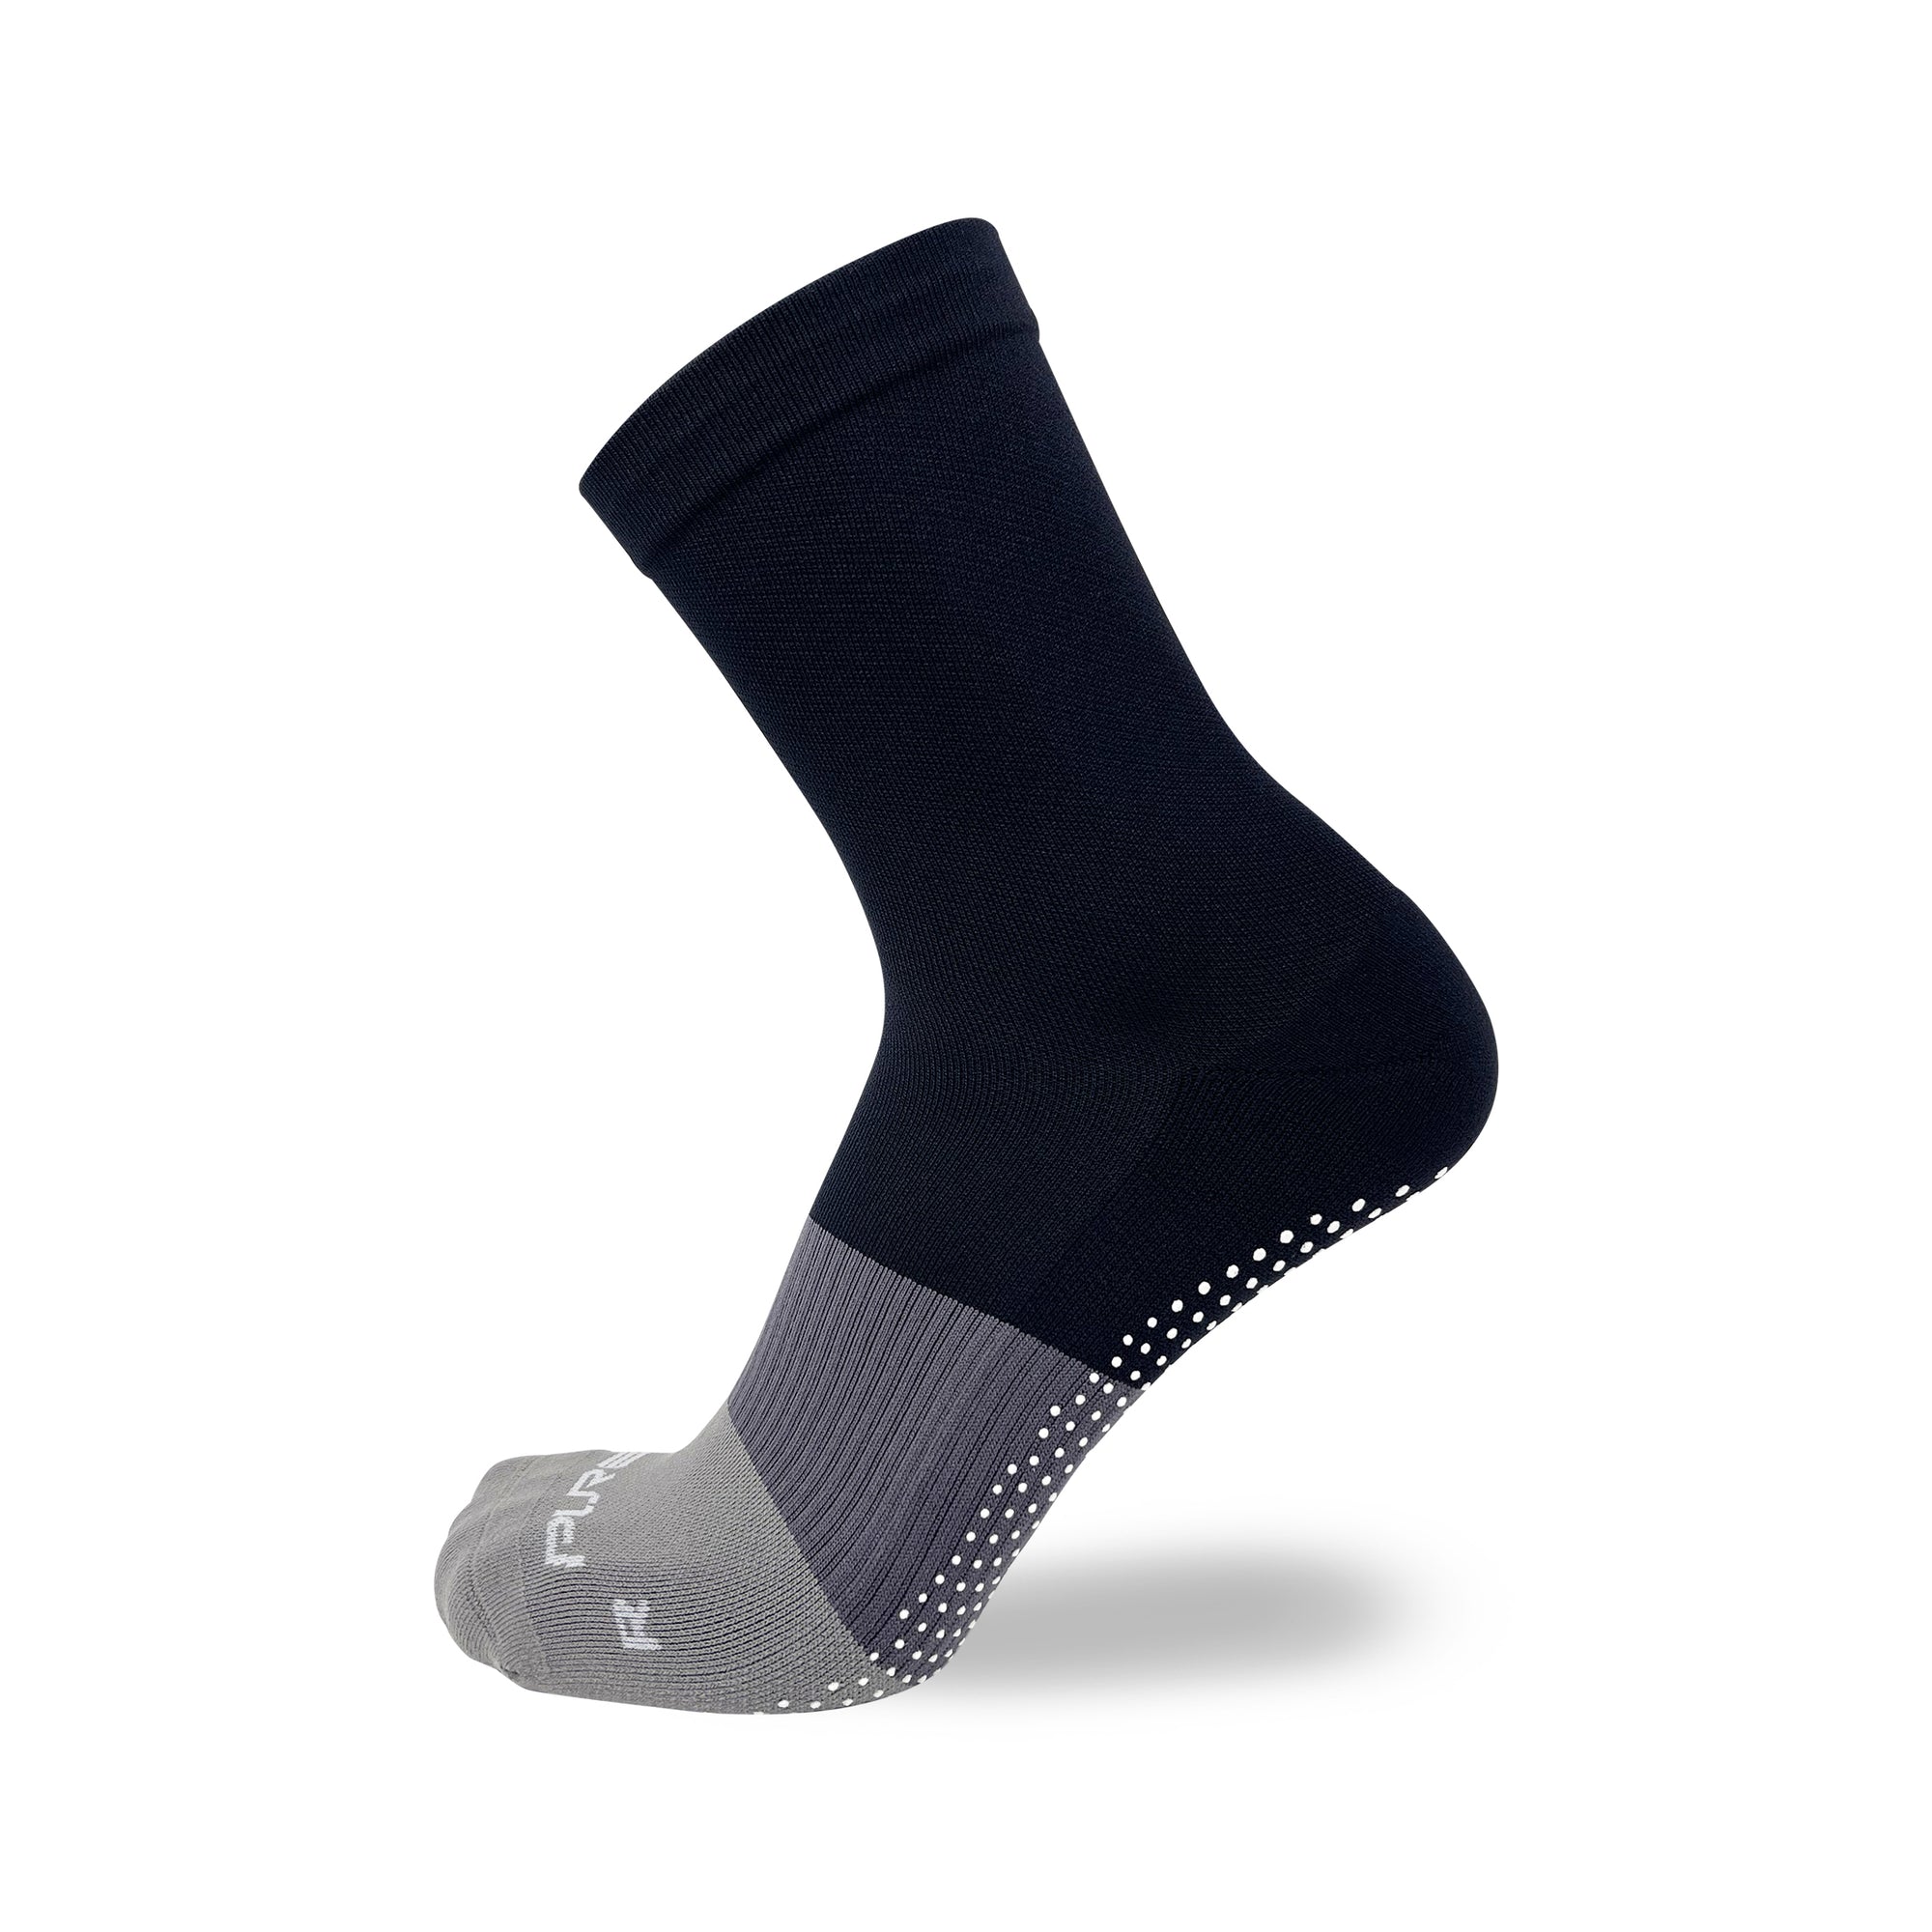 Crew Colorblock Grip Socks - Black/Grey - S